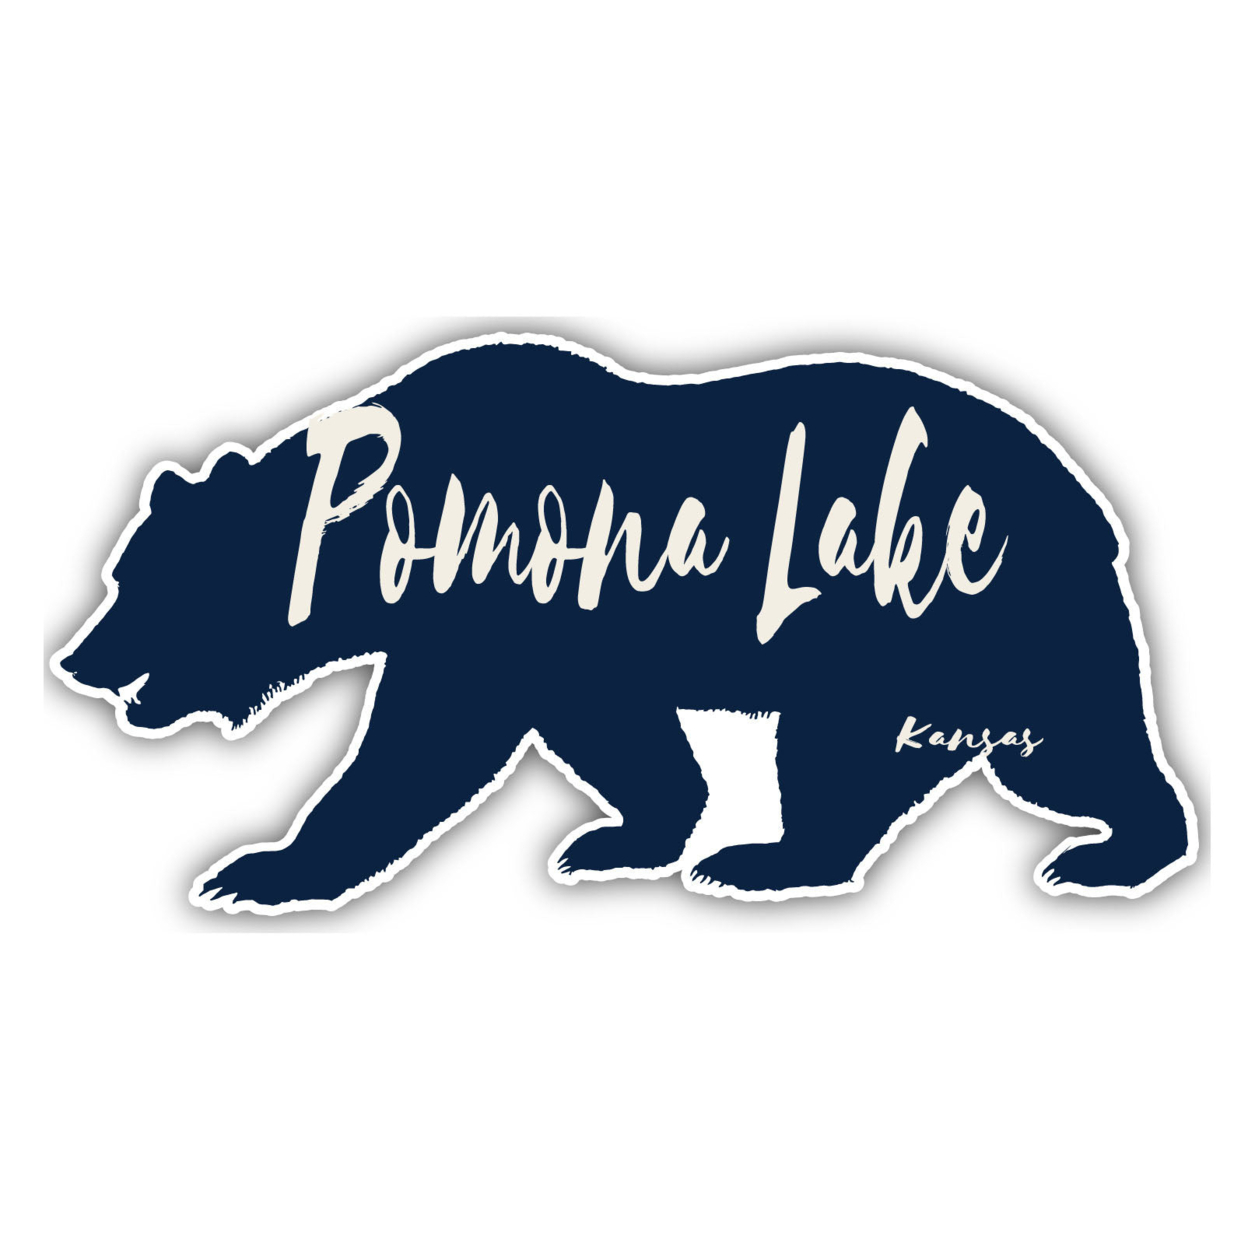 Pomona Lake Kansas Souvenir Decorative Stickers (Choose Theme And Size) - Single Unit, 2-Inch, Bear